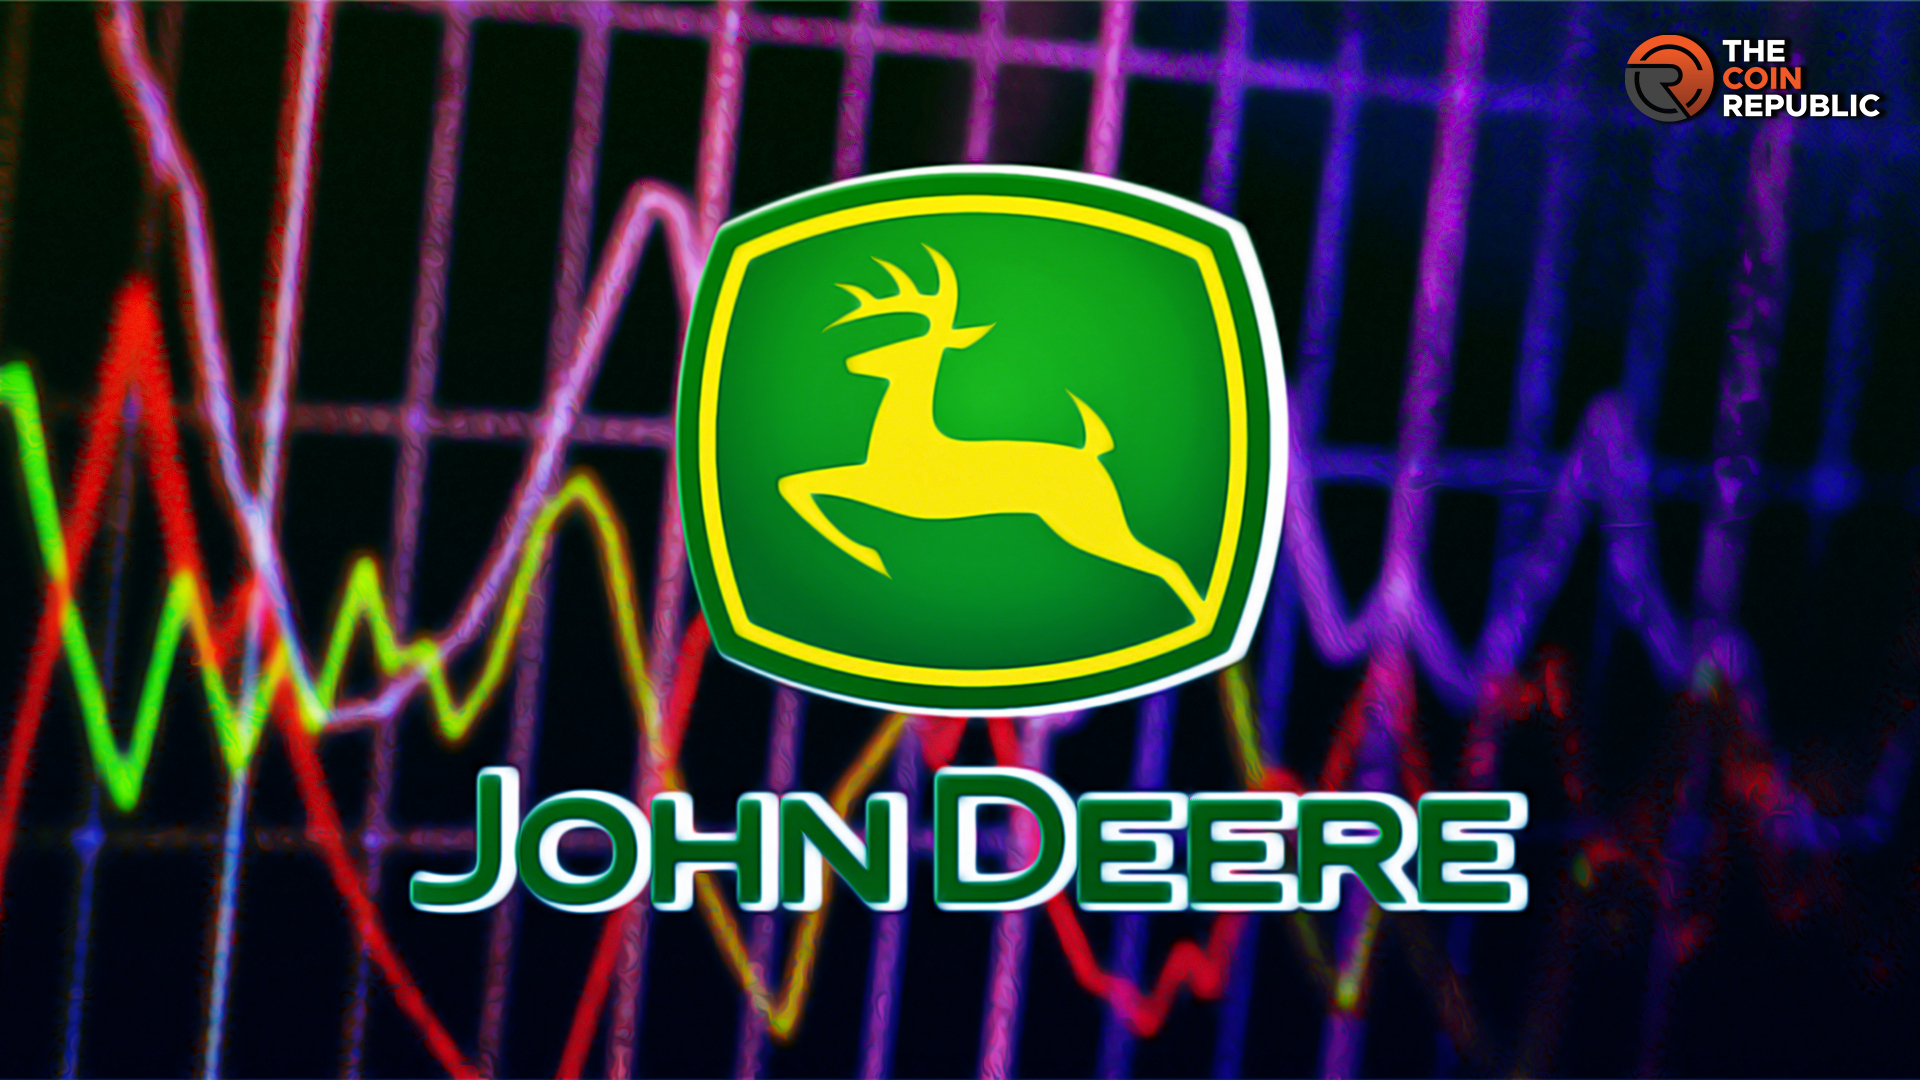 Deere Stock Price Forecast: Will DE Stock Reach $450 Mark?